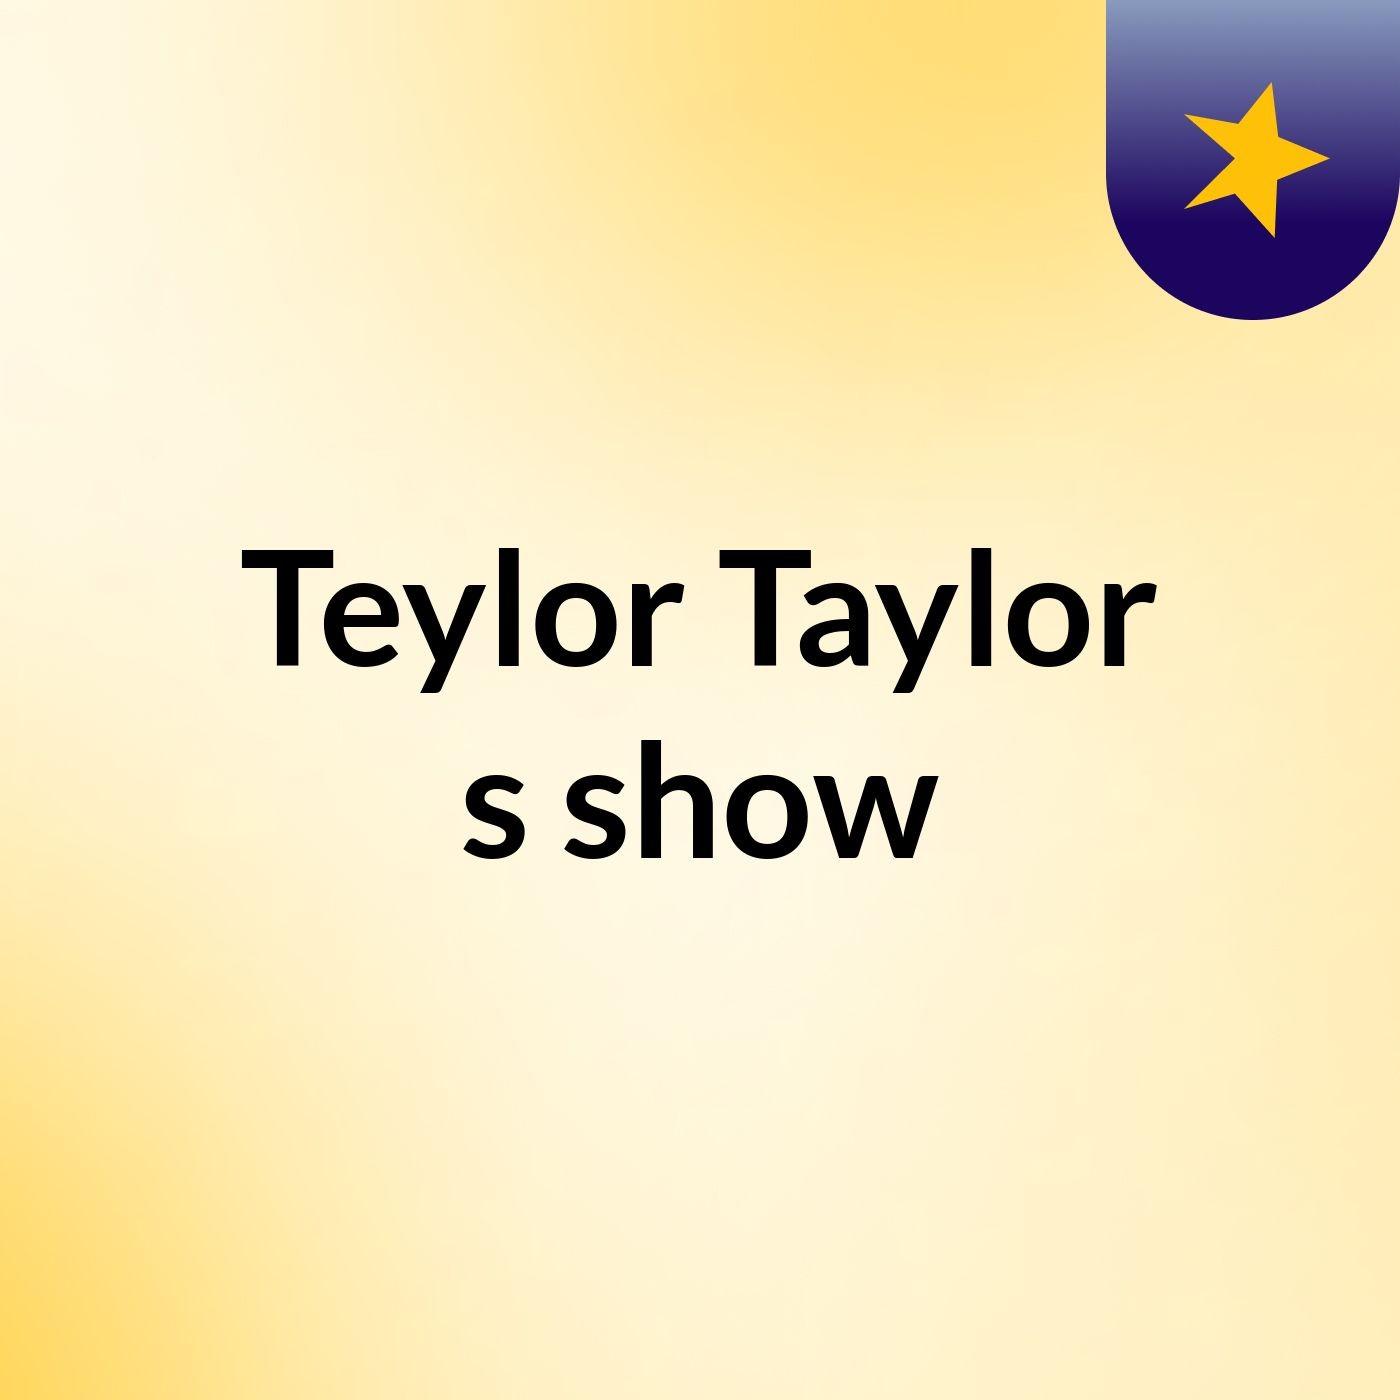 Teylor Taylor's show